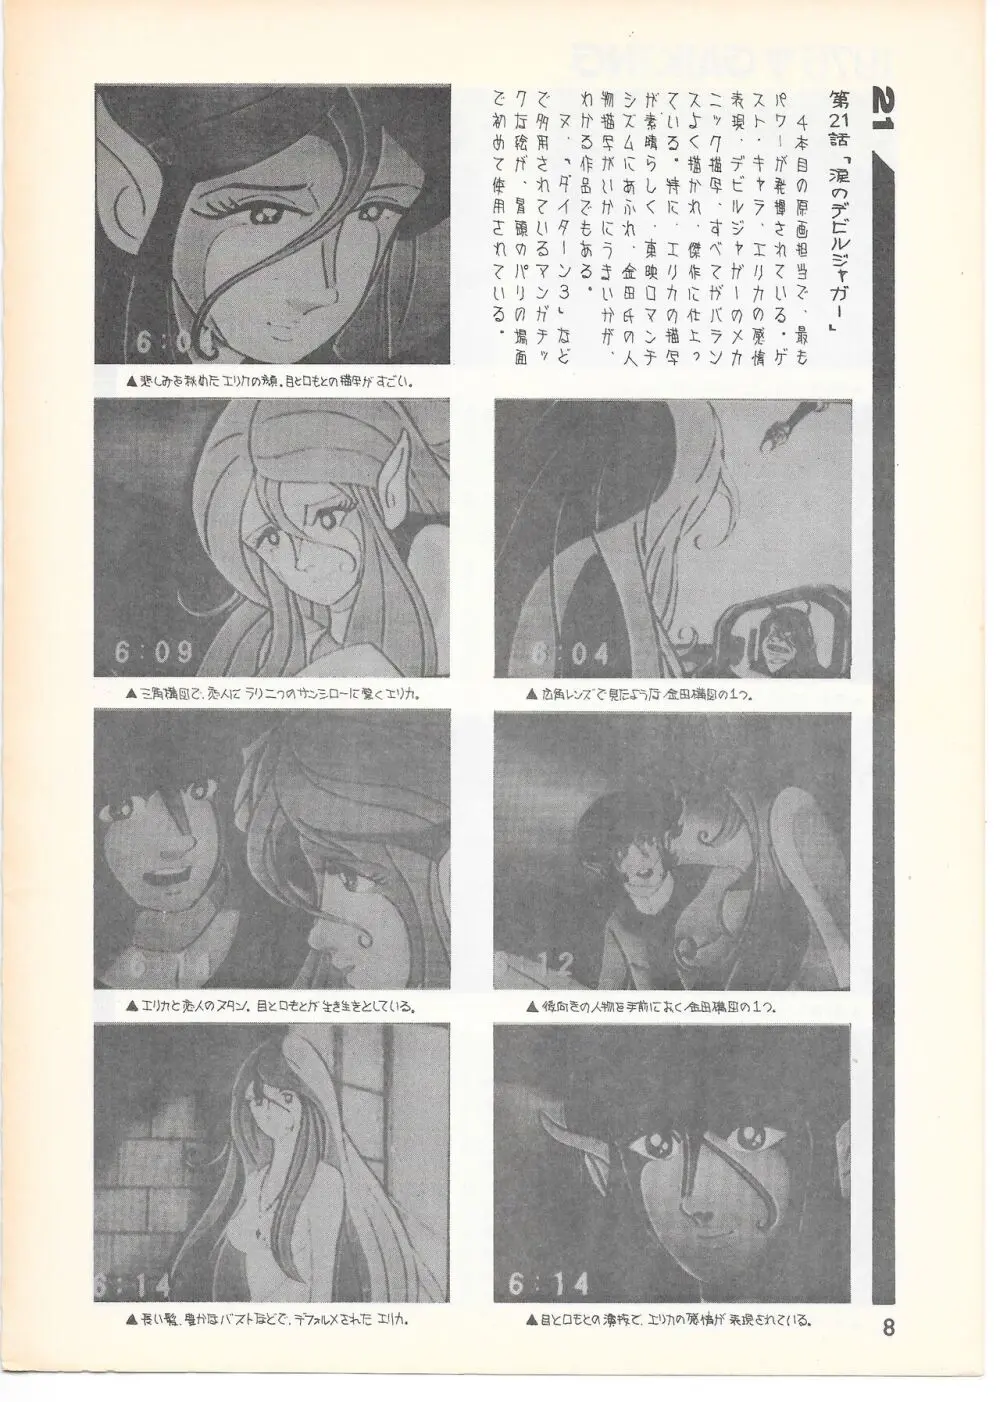 THE ANIMATOR 1 金田伊功特集号 - page7